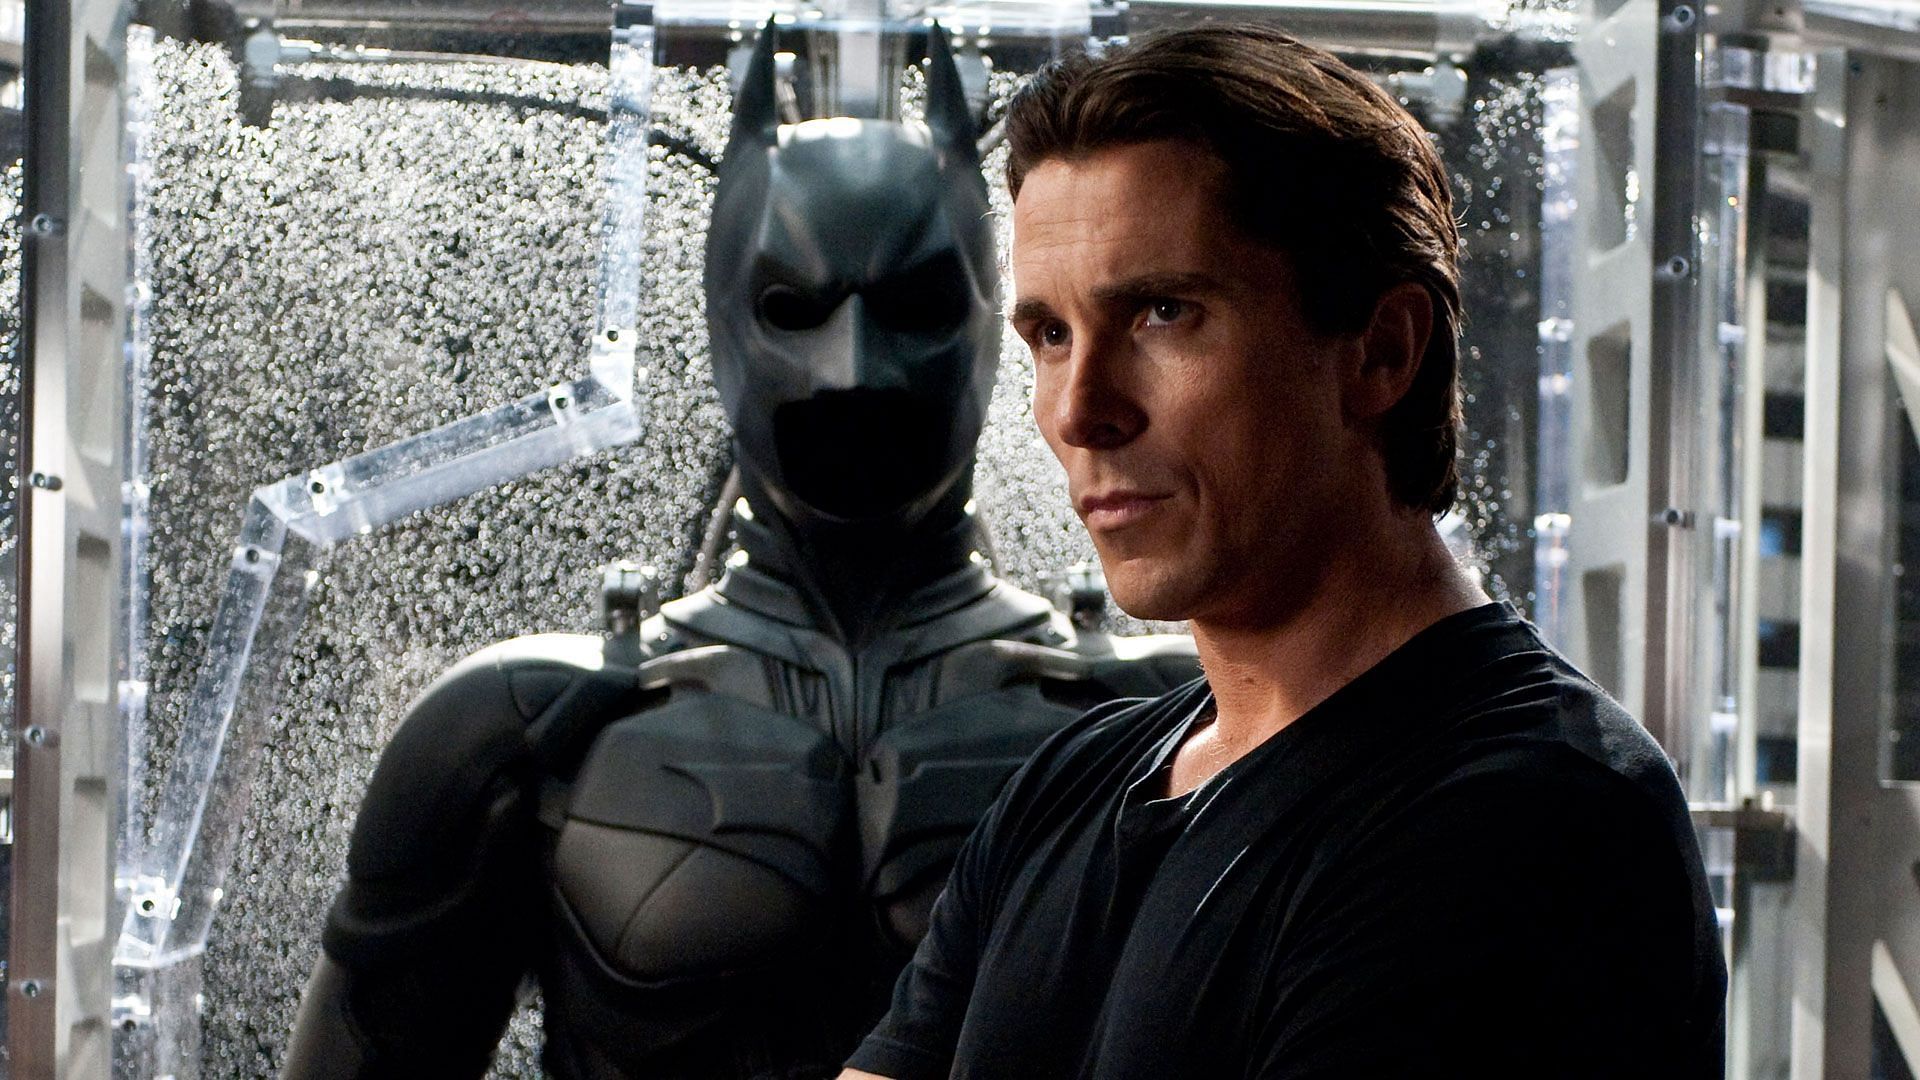 Christian Bale as Batman in The Dark Knight (Image via Warner Bros.)